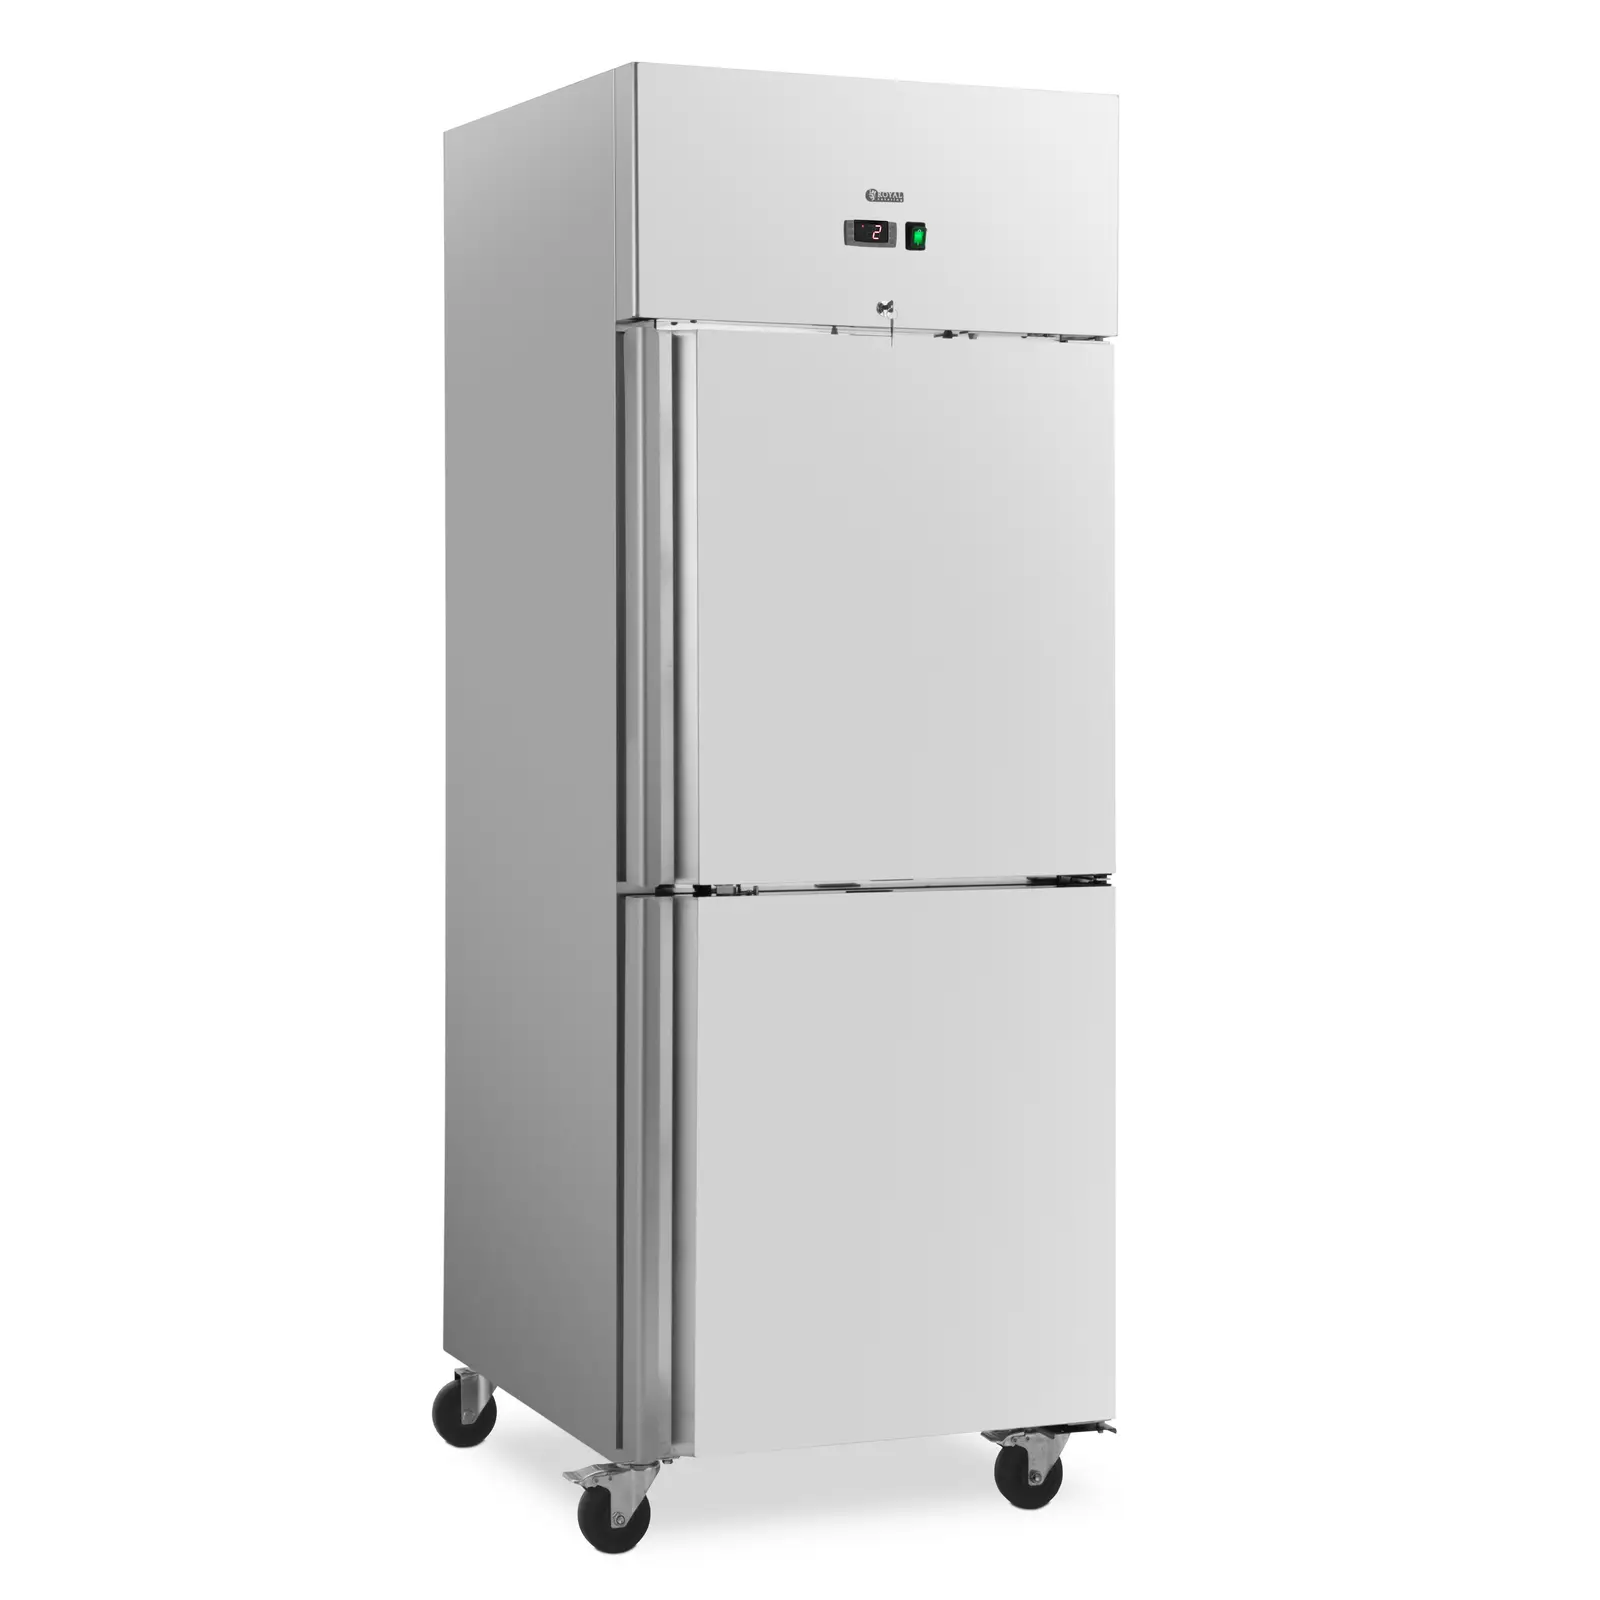 Gastro-Kühlschrank - 485 l - Edelstahl - 2 Türen - 4 Rollen - abschließbar - Royal Catering